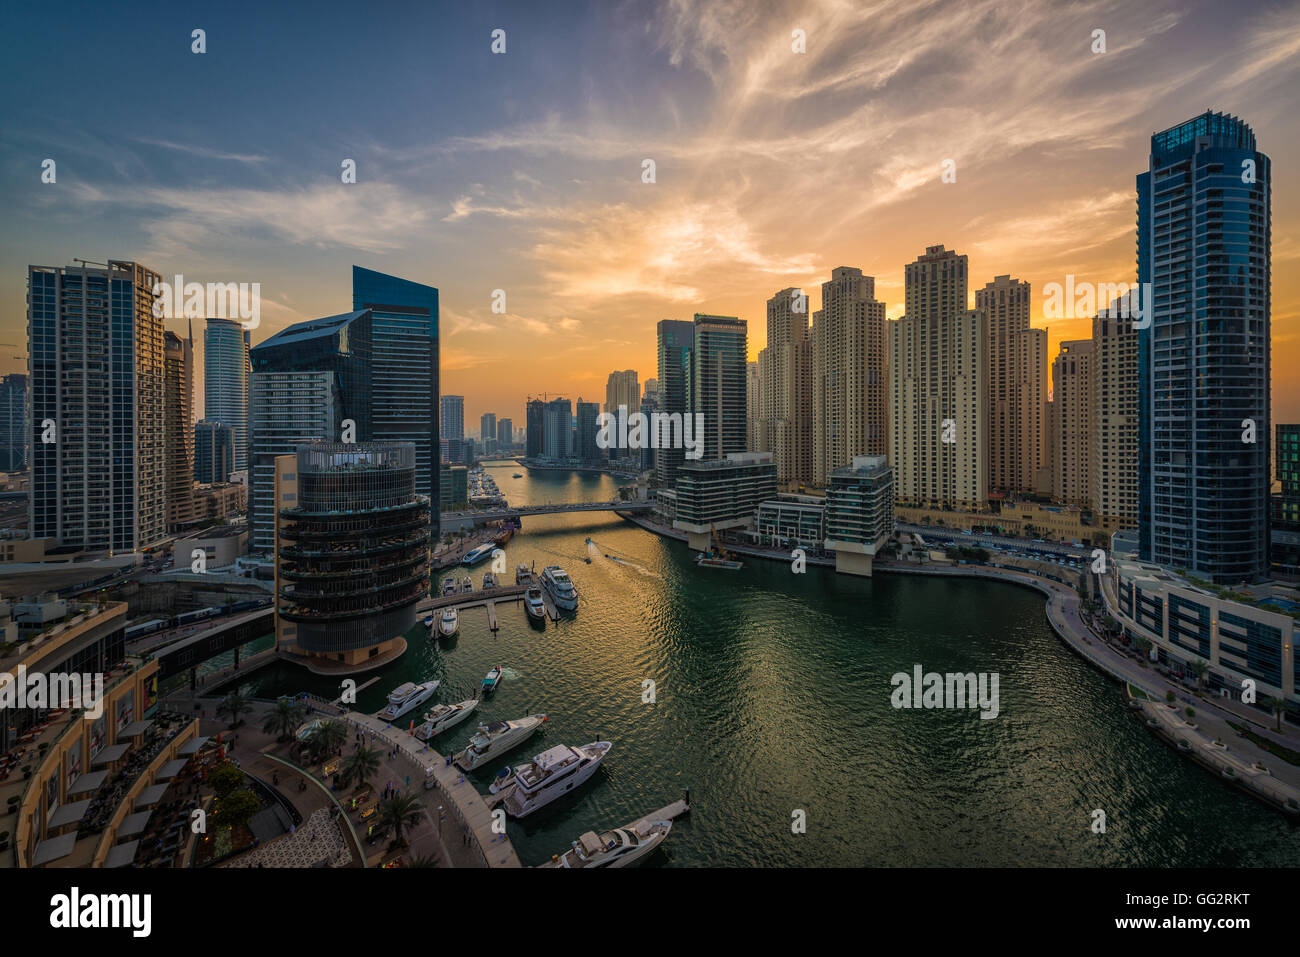 View of Dubai Marina from The Address Hotel, Dubai, United Arab Emirates Stock Photo